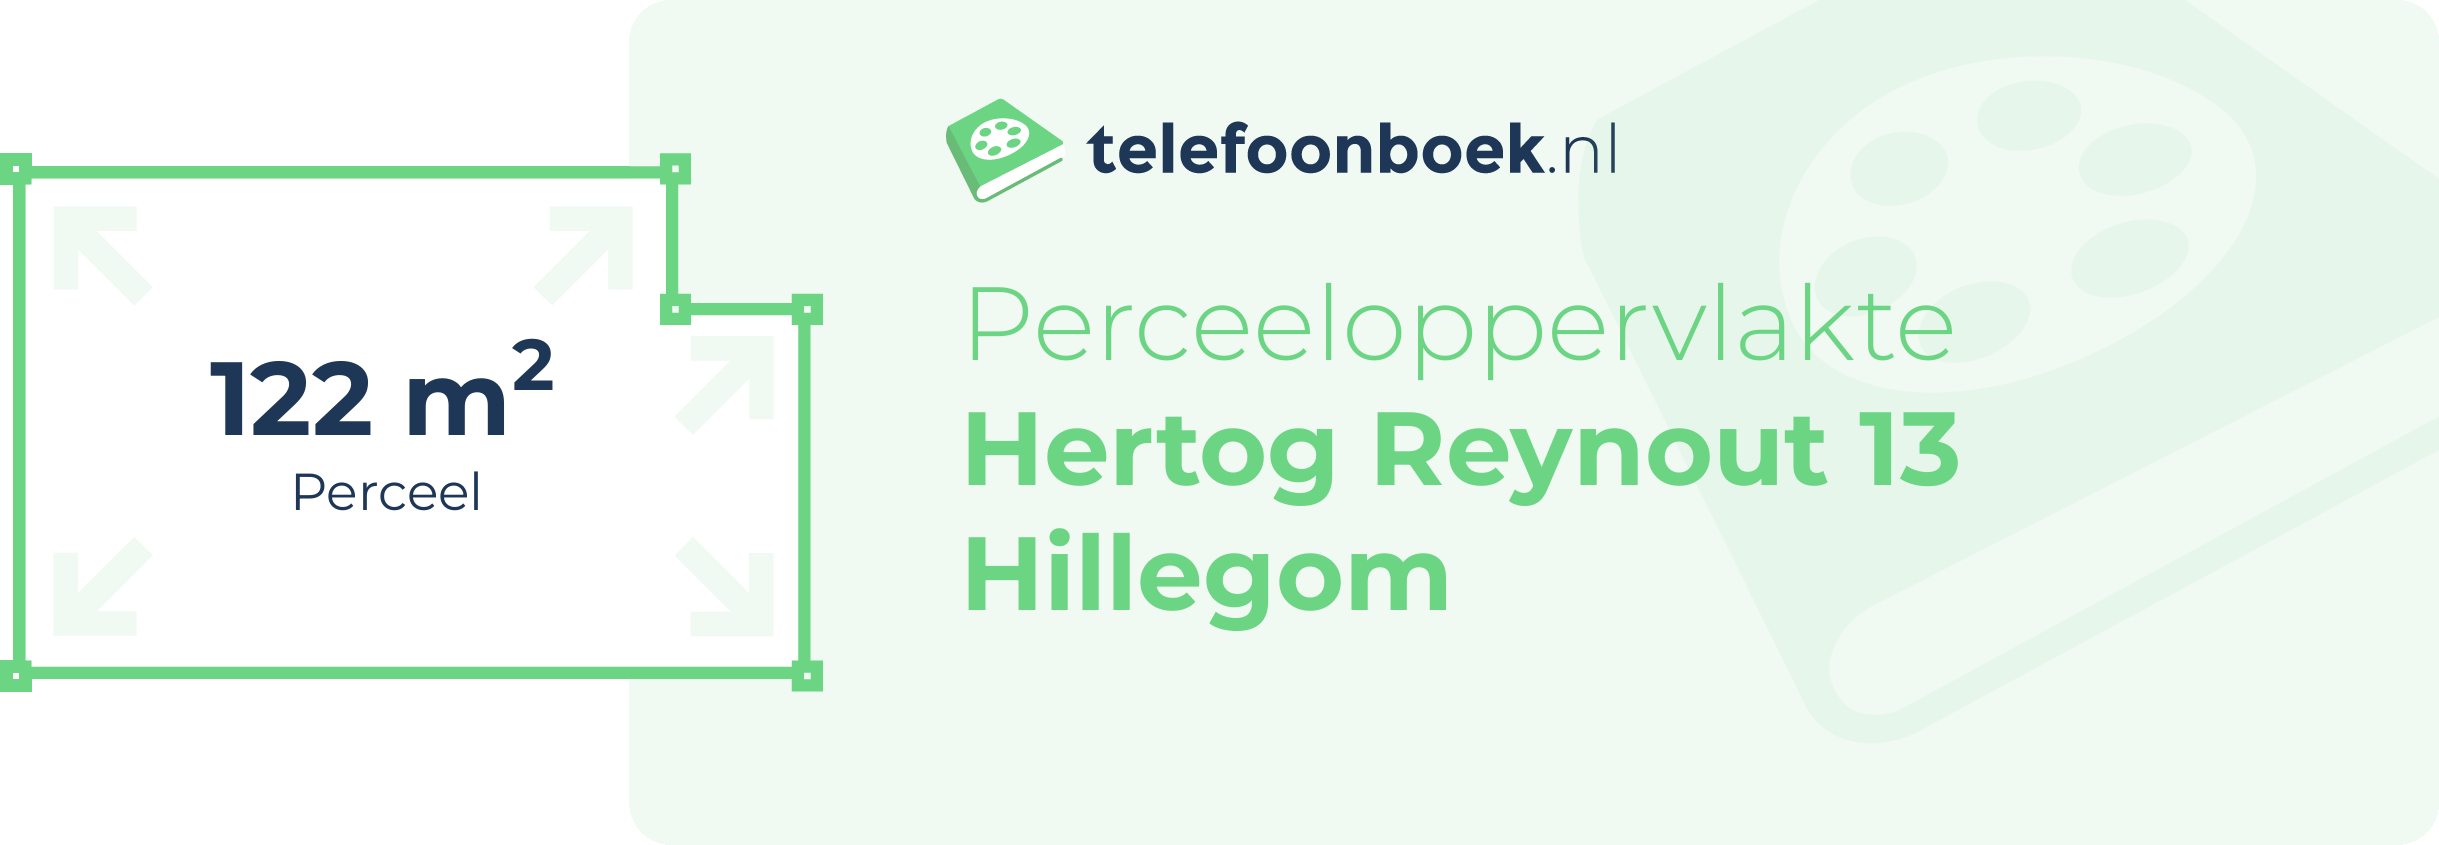 Perceeloppervlakte Hertog Reynout 13 Hillegom